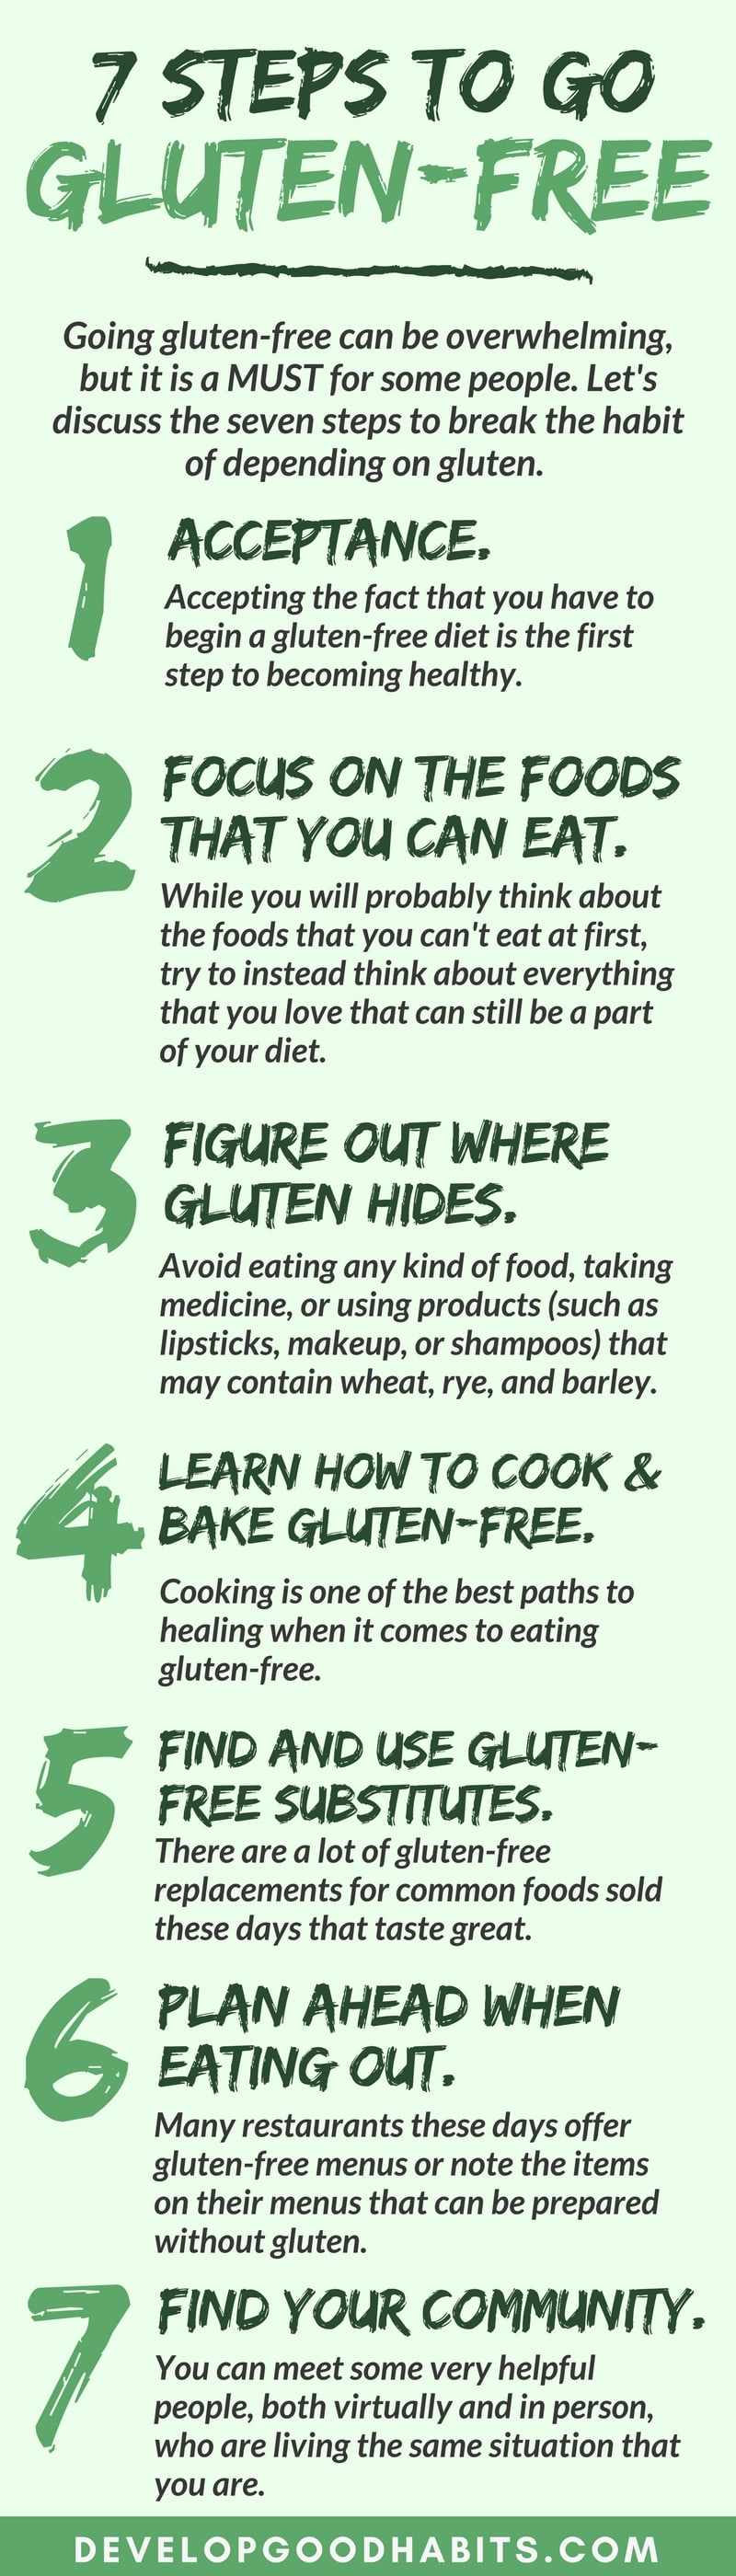 7 Steps to Go Gluten-Free and Break the Gluten Habit